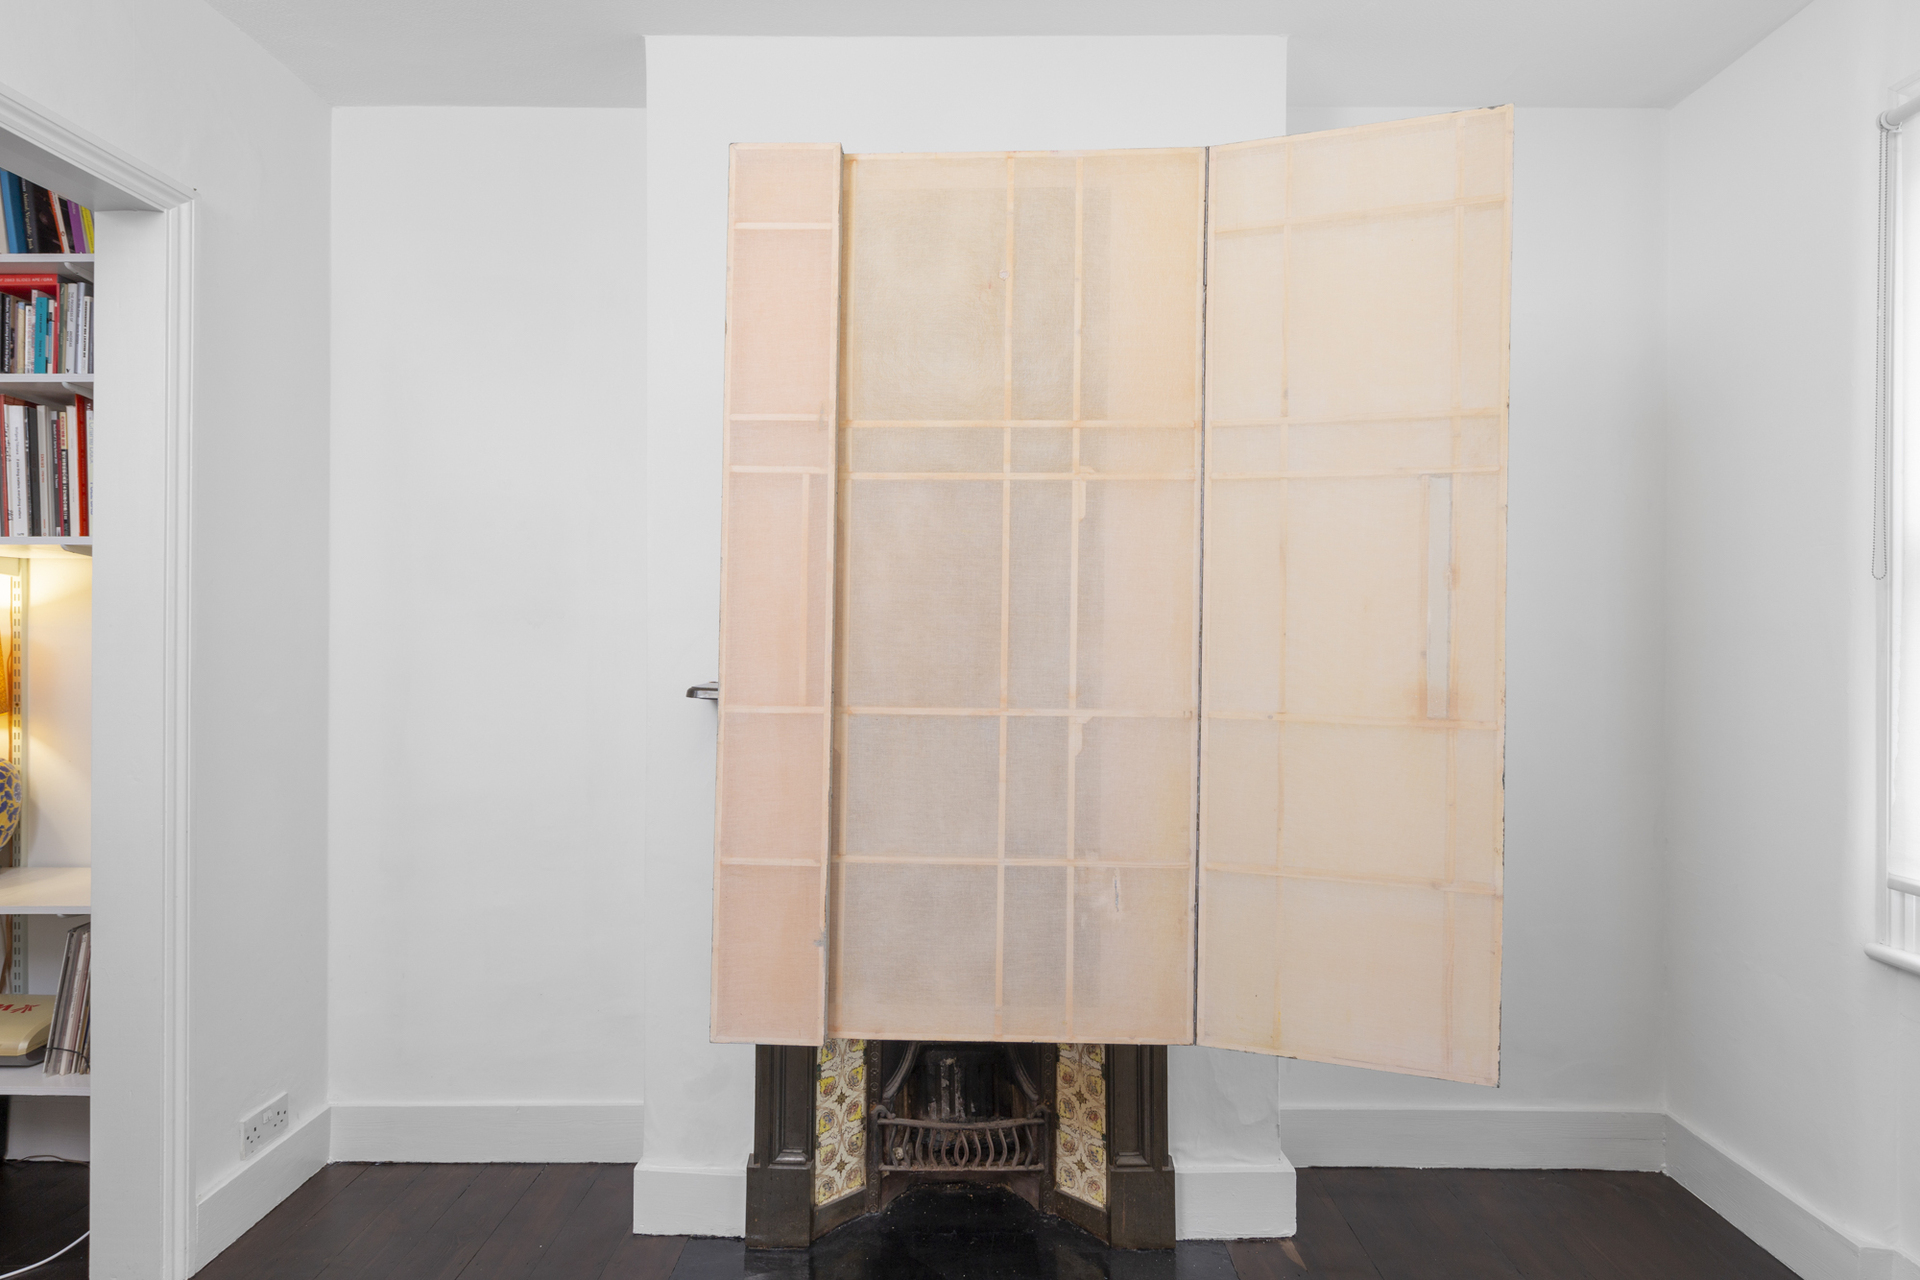 Henrik Potter, Trauerspiel / Skinny, 2021 Oil paint, muslin, wood, air dry clay, hinges, glue, thread 150 x 80 x 7 cm (closed)